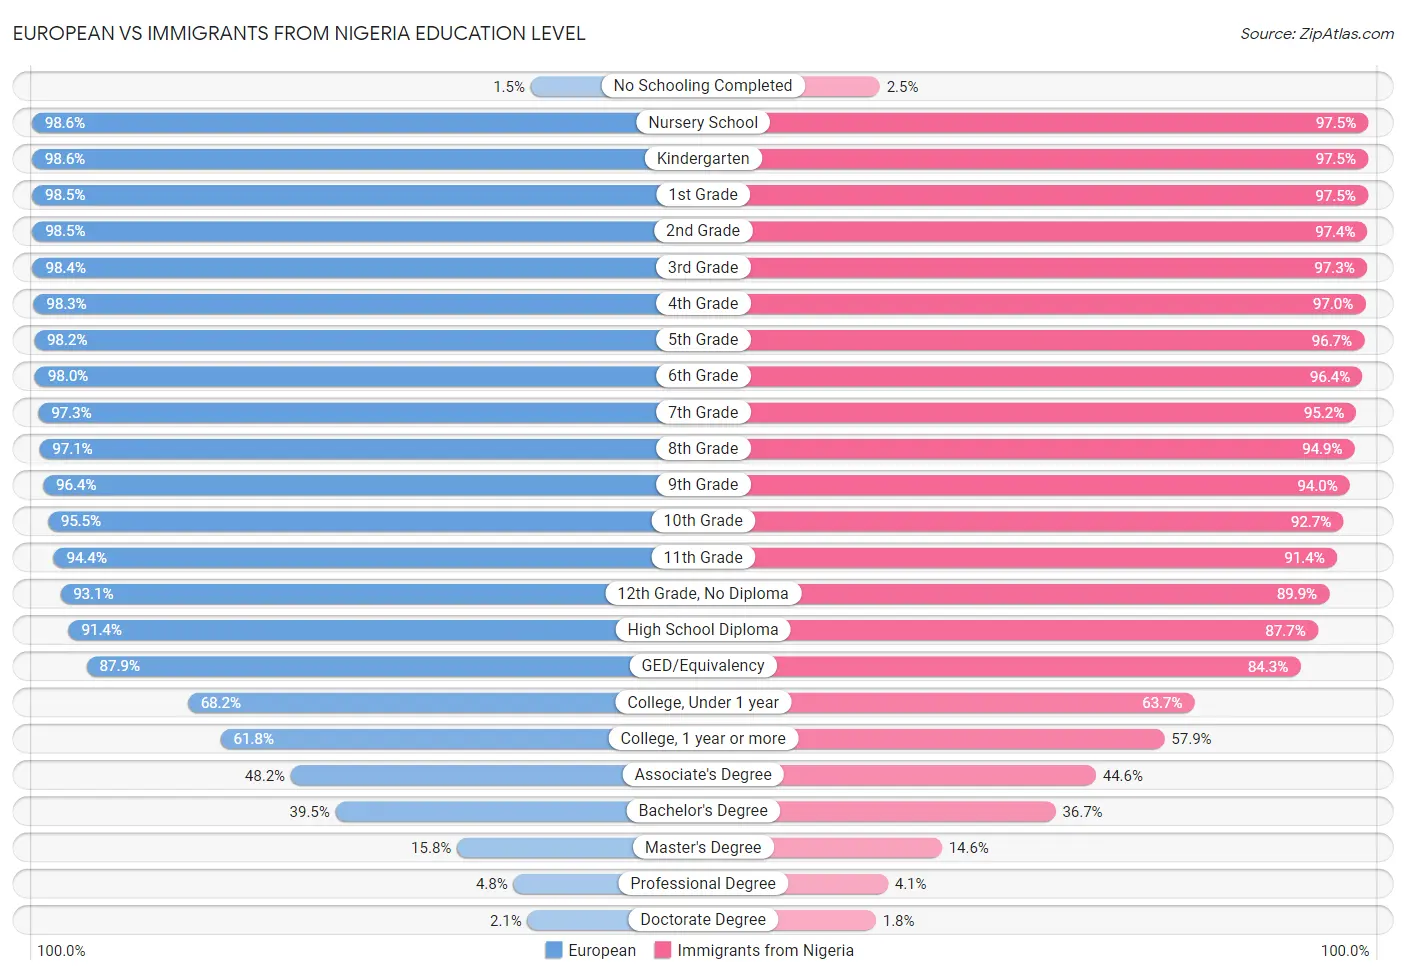 European vs Immigrants from Nigeria Education Level